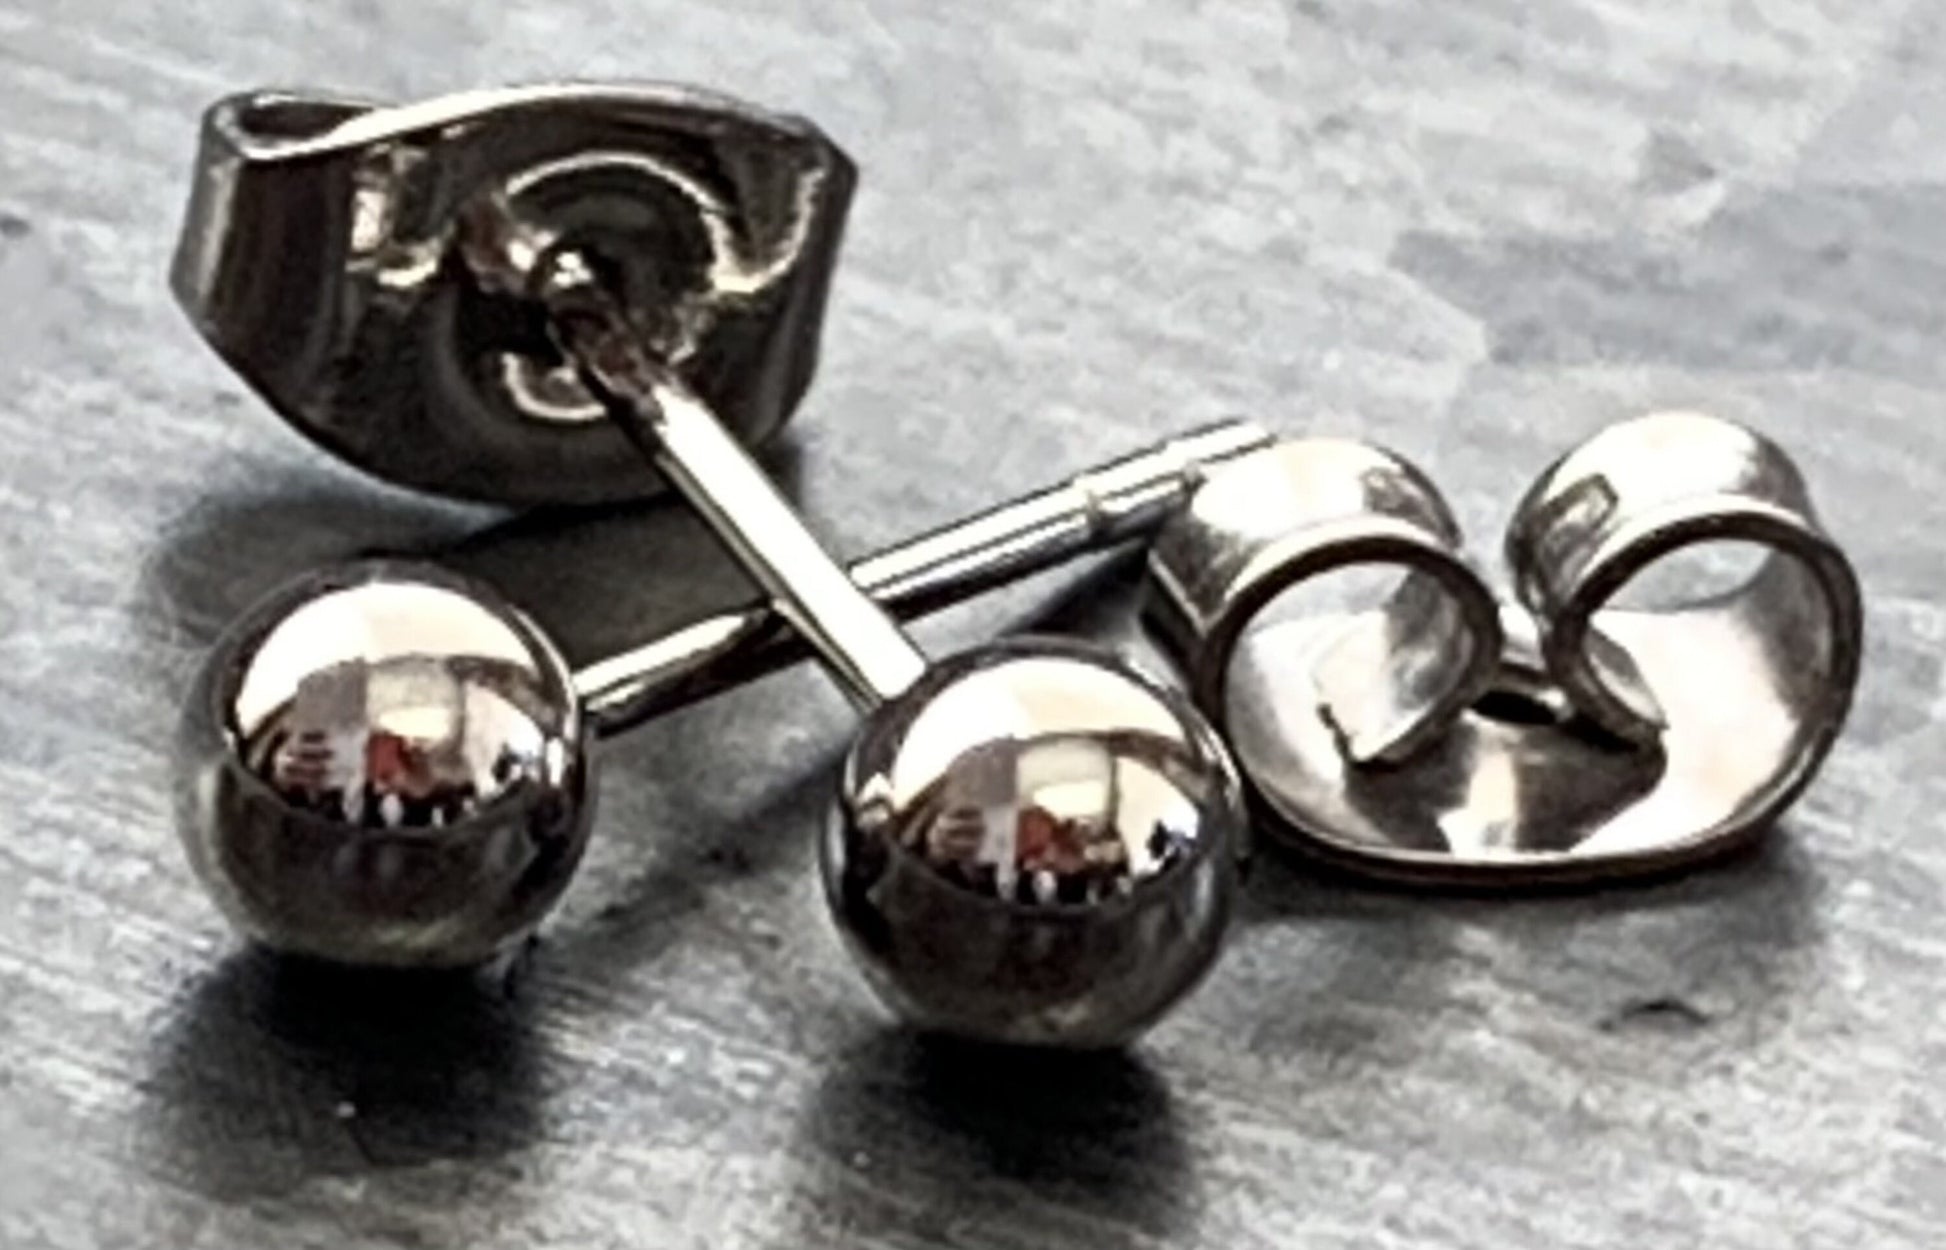 Pair of 100% Solid Titanium ( 6AL-4VELI ASTM F-136 Implant Grade 23) Ball Stud Earrings - 3mm thru 5mm Available!